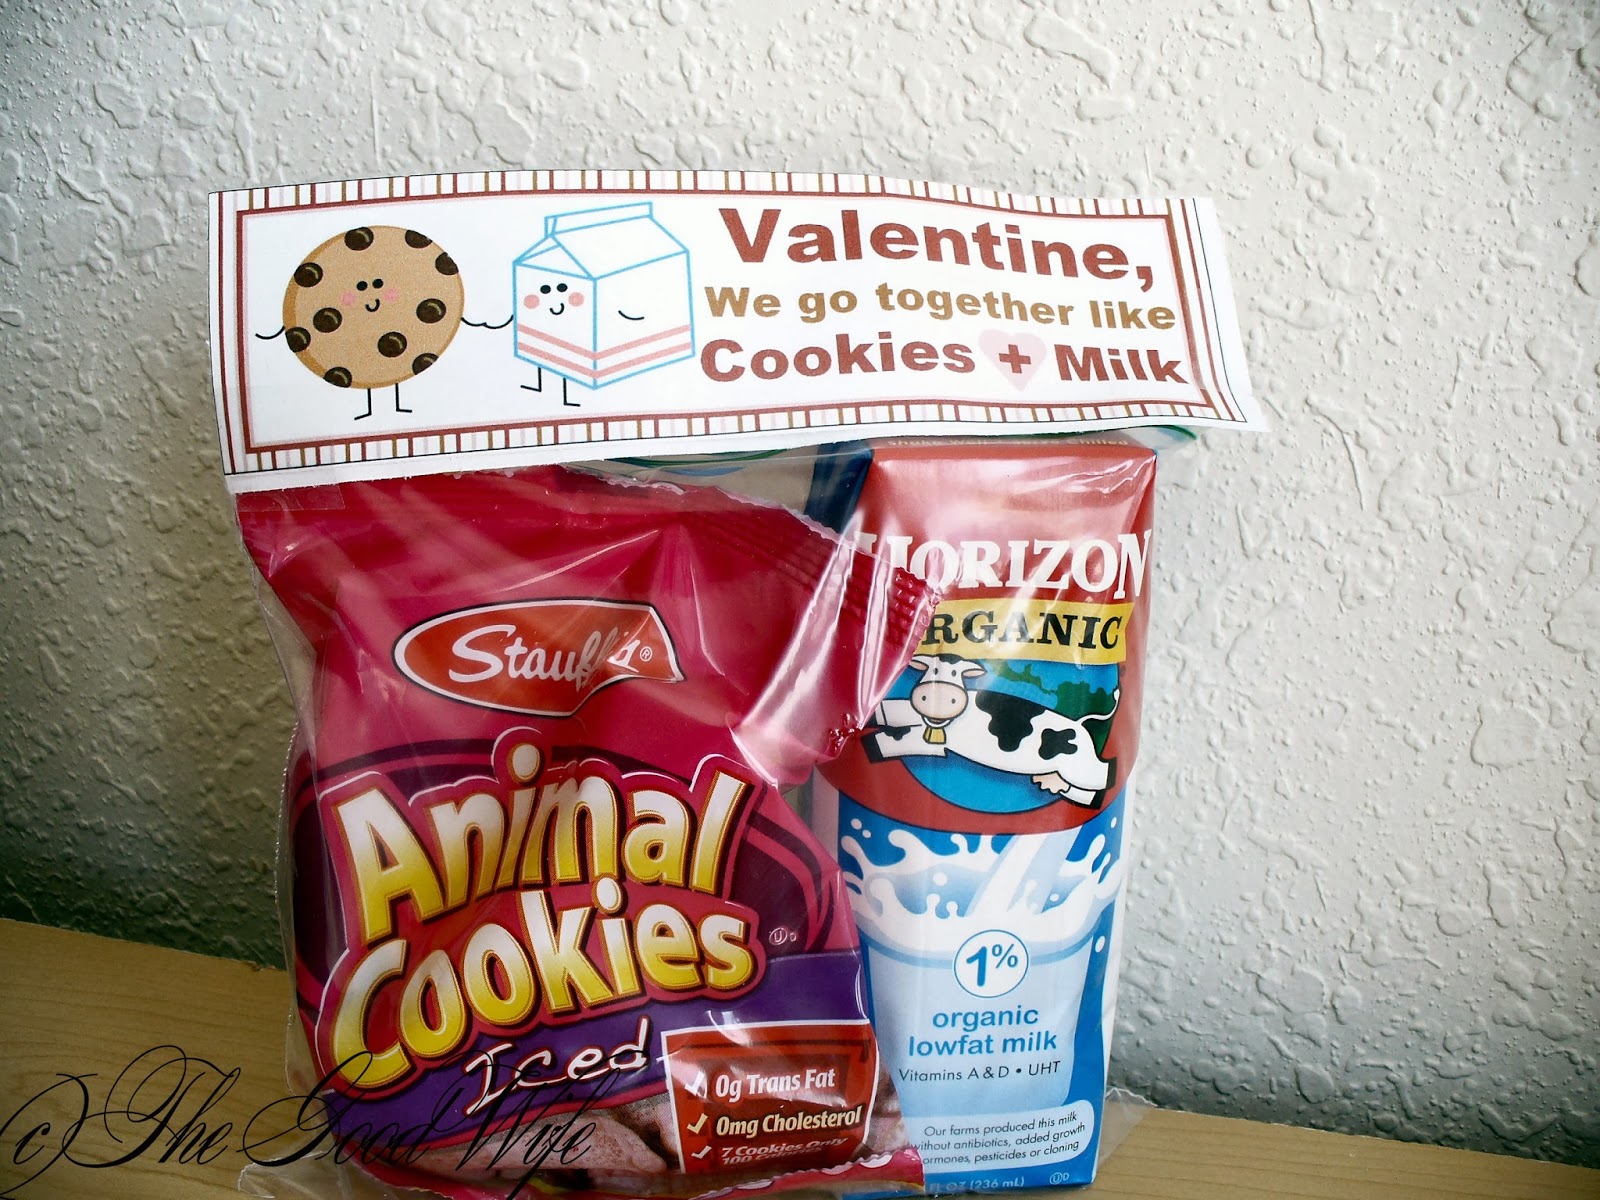 the-good-wife-milk-cookies-valentine